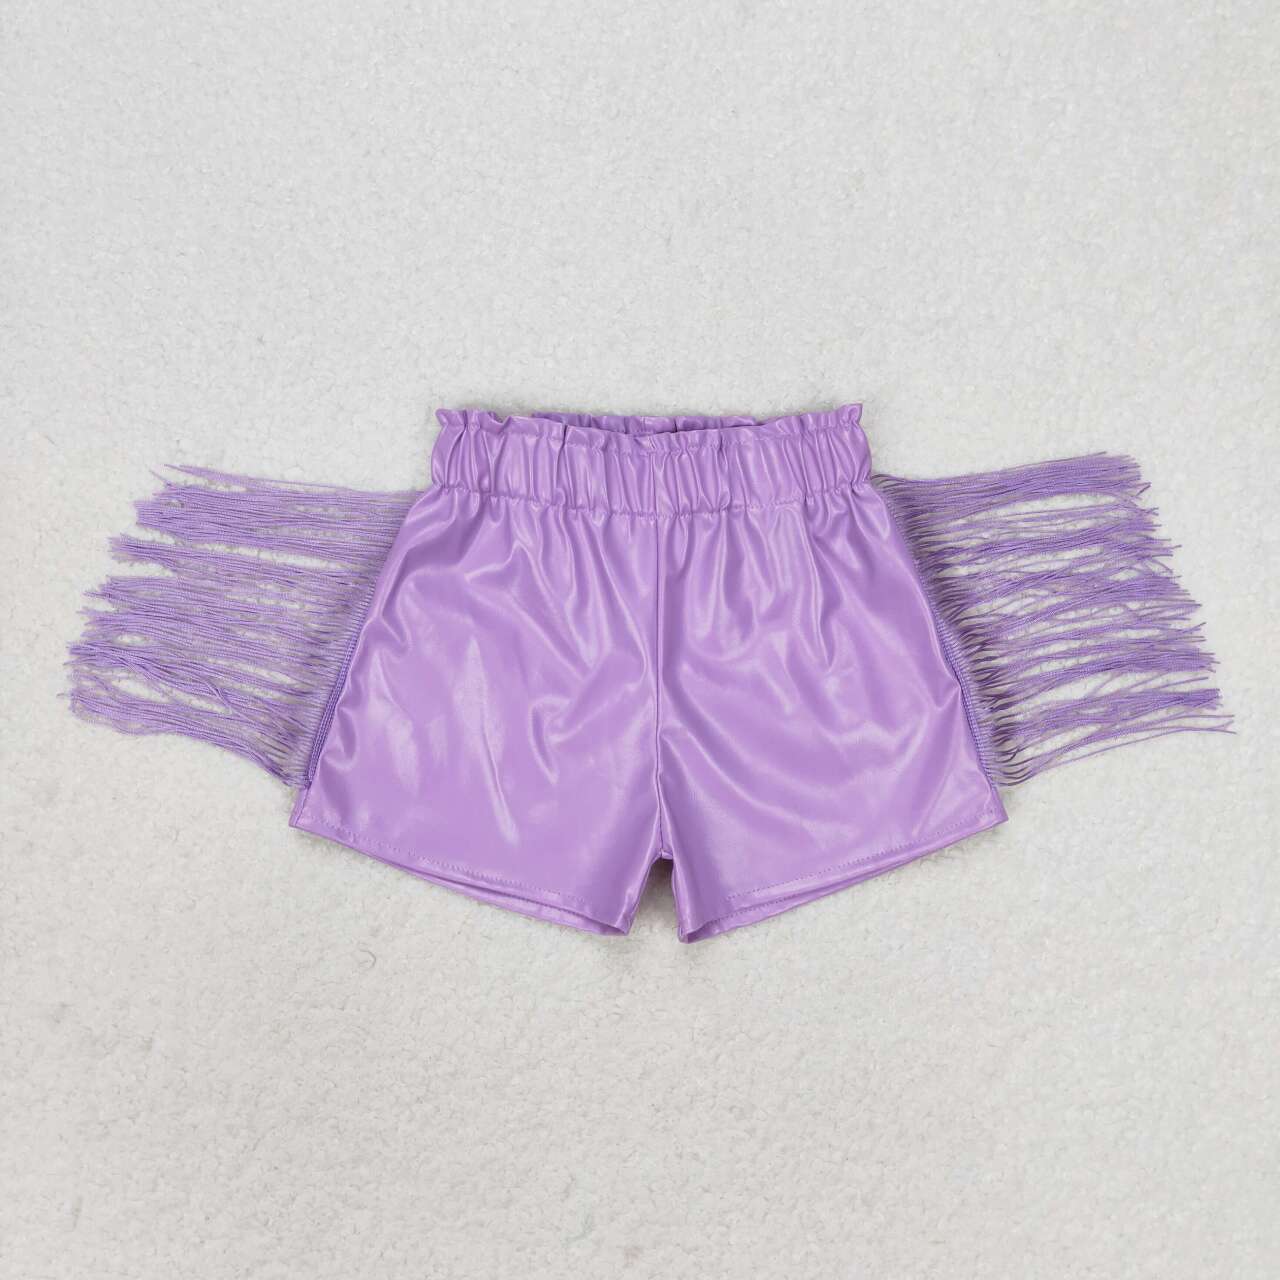 SS0251 Purple Leather Tassel Girls Summer Shorts